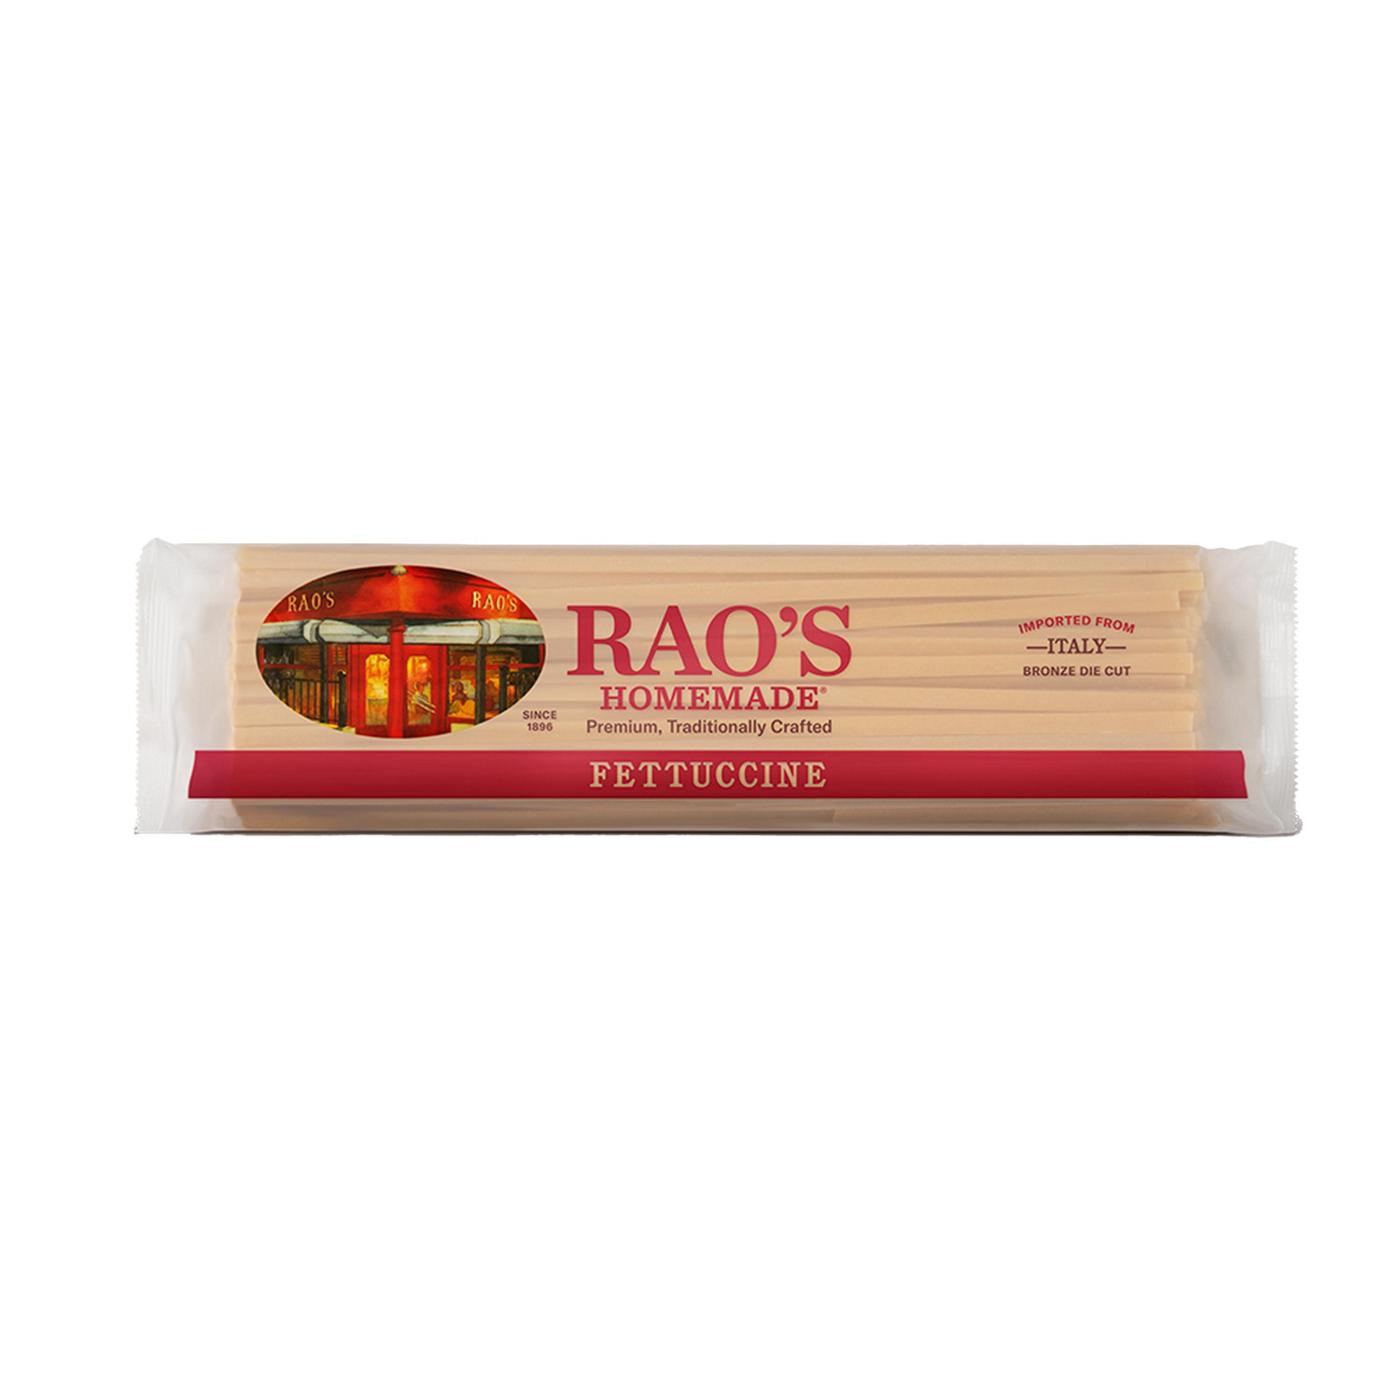 Rao's Homemade Fettuccine Pasta; image 1 of 3